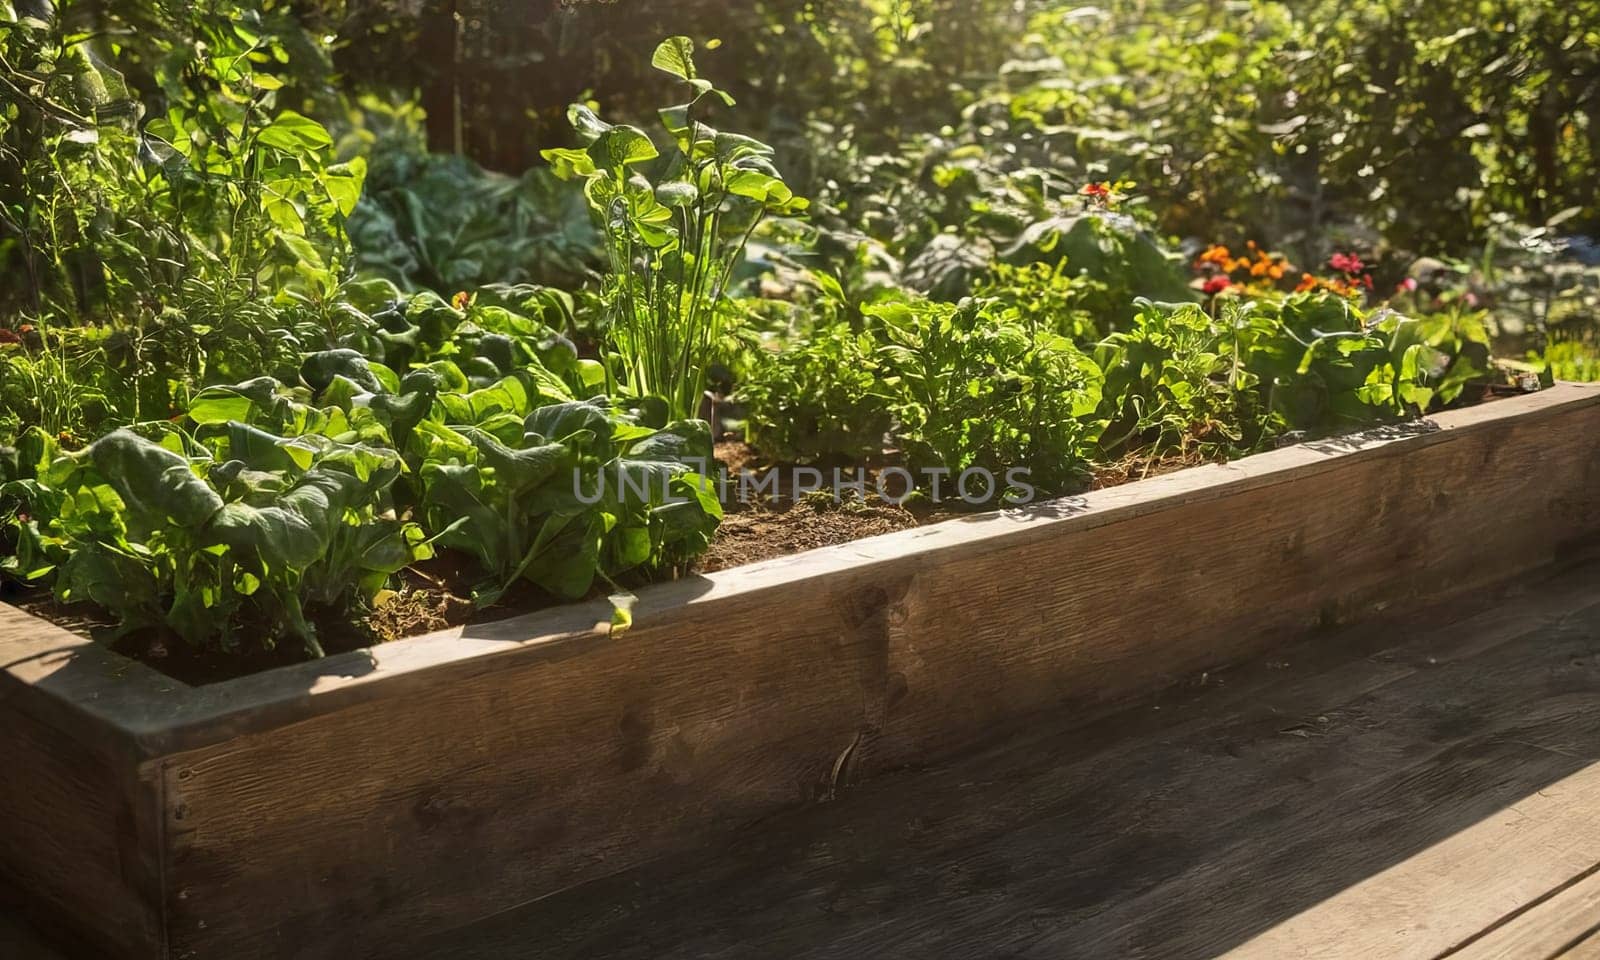 Raised wooden bed in backyard garden by fascinadora